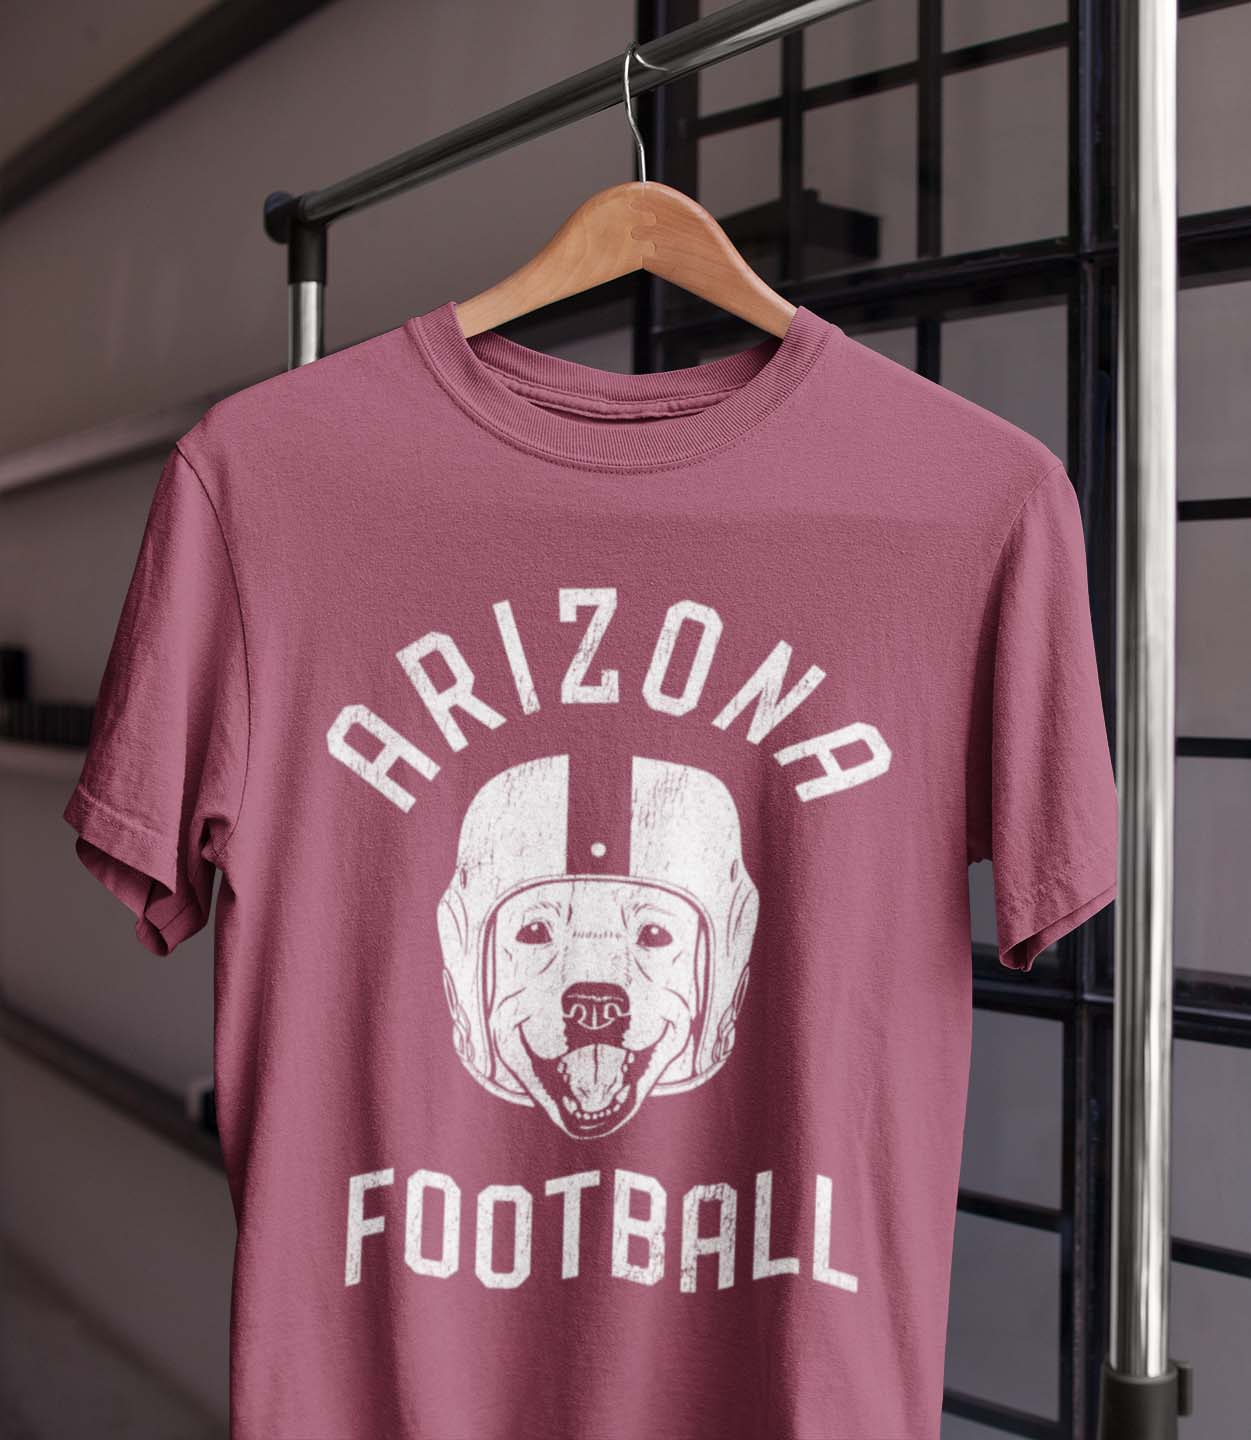 Arizona Football Labrador T-Shirt